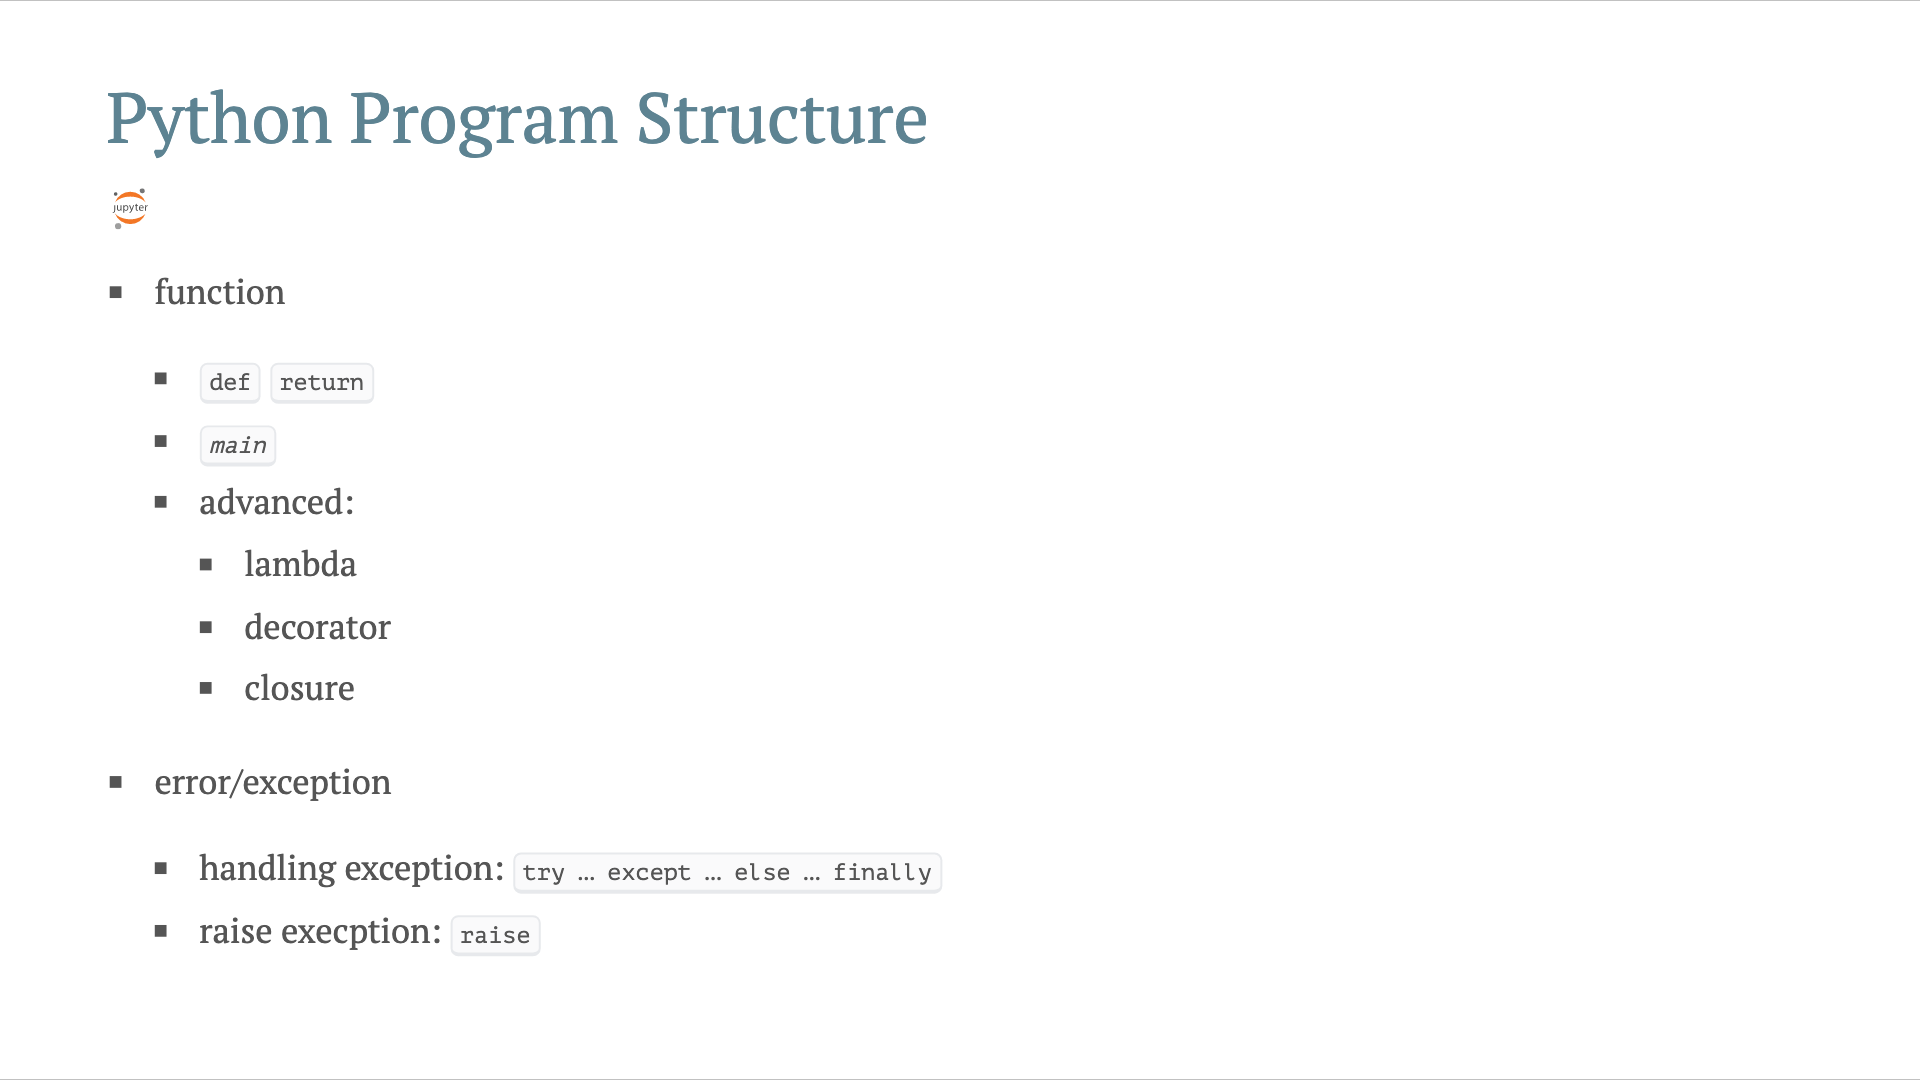 program structure